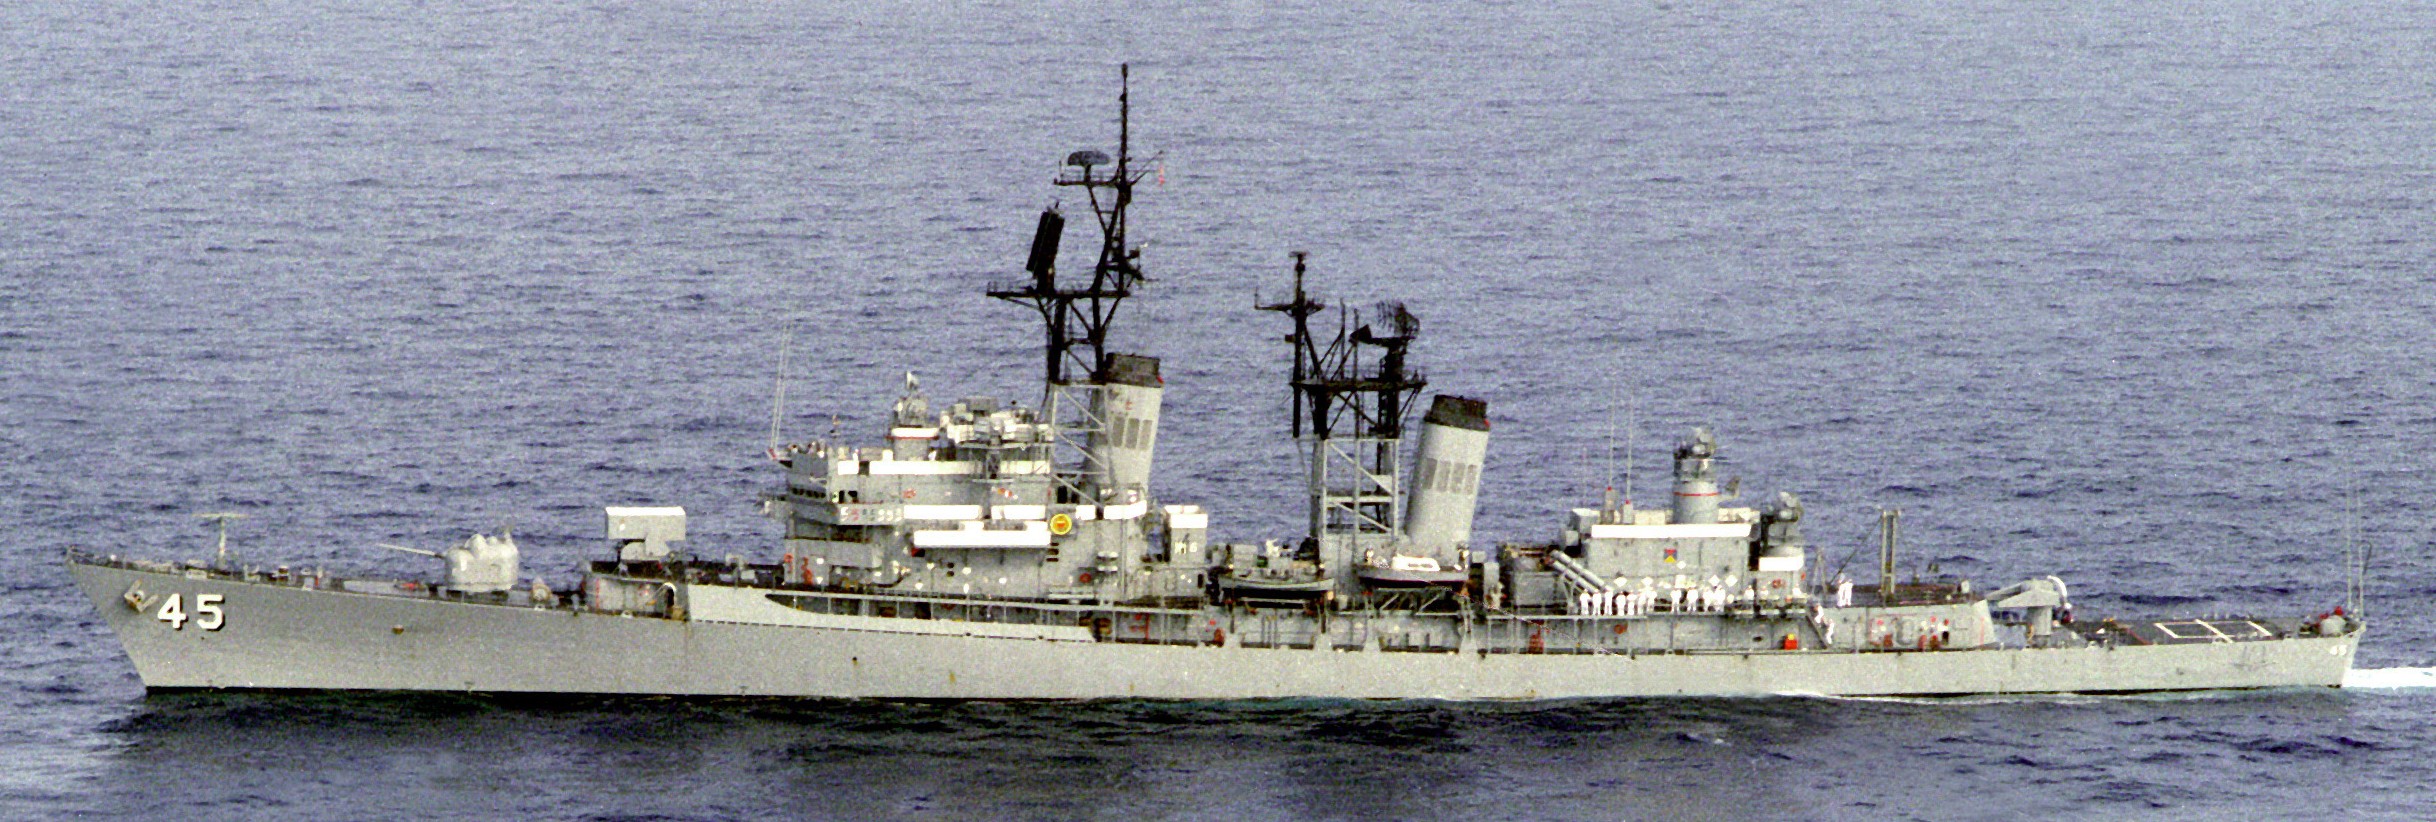 ddg-45 uss dewey farragut class destroyer us navy 1987 09